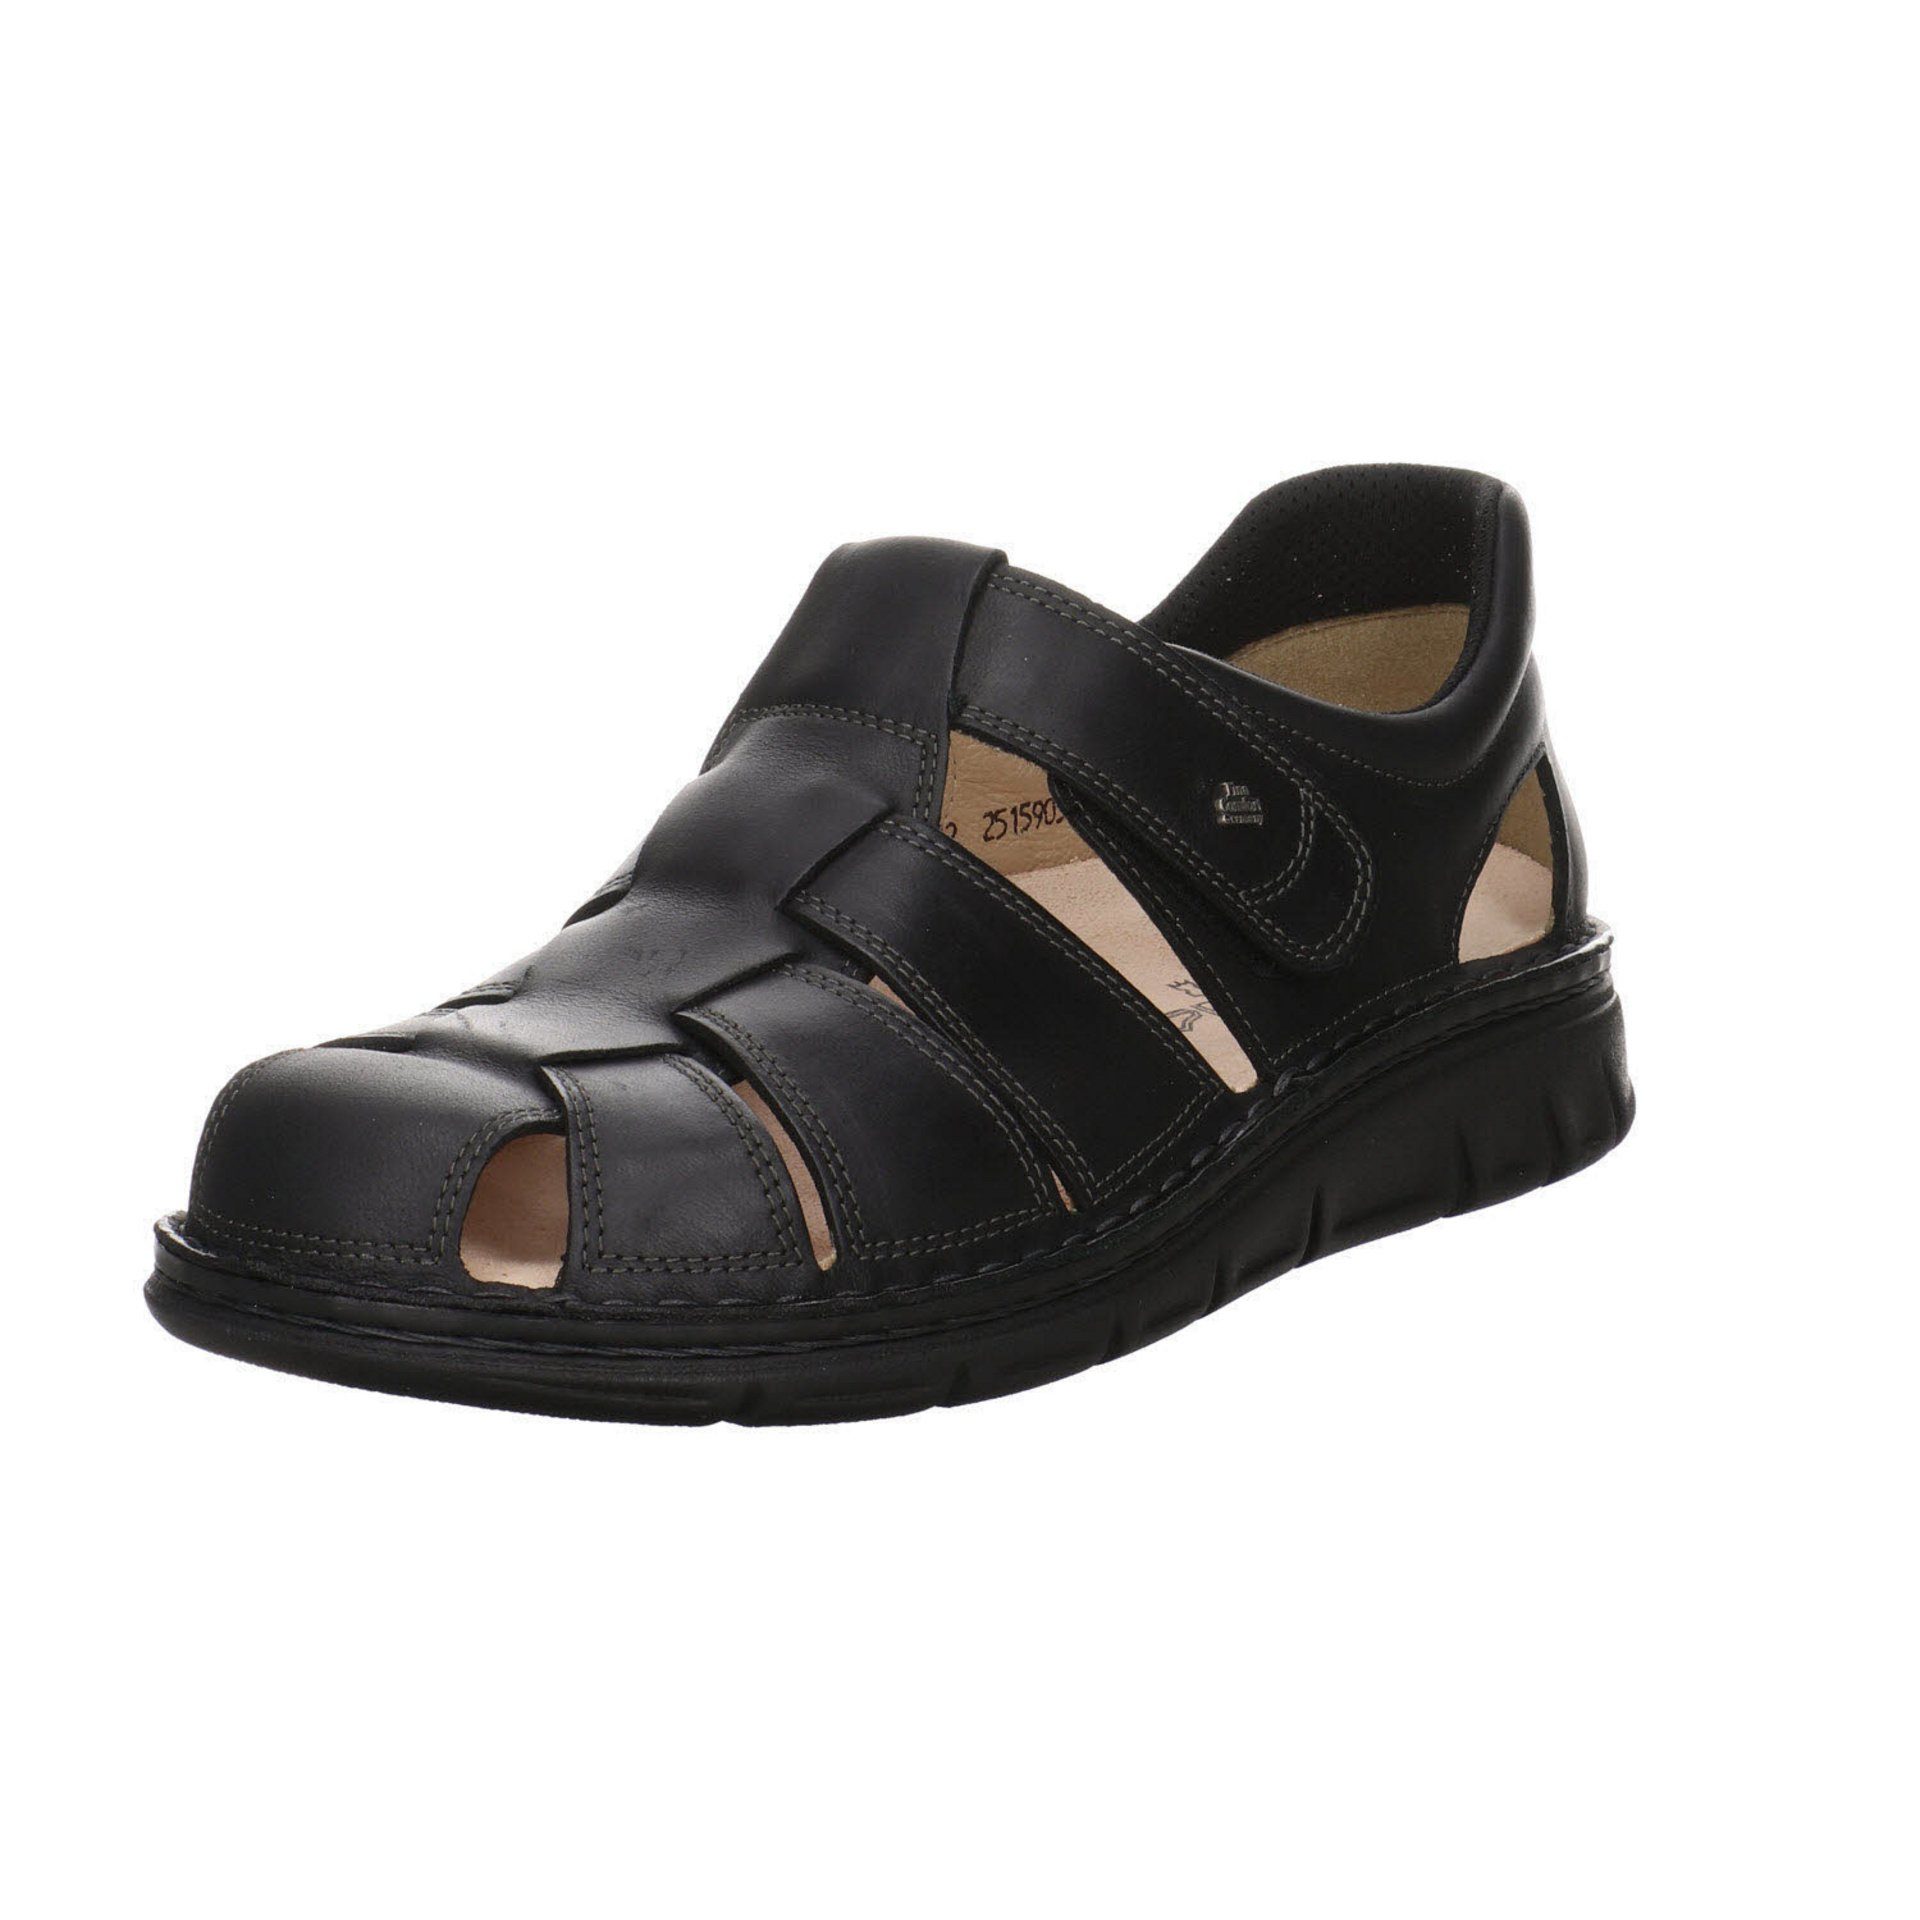 Finn Comfort Schuhe online kaufen | OTTO